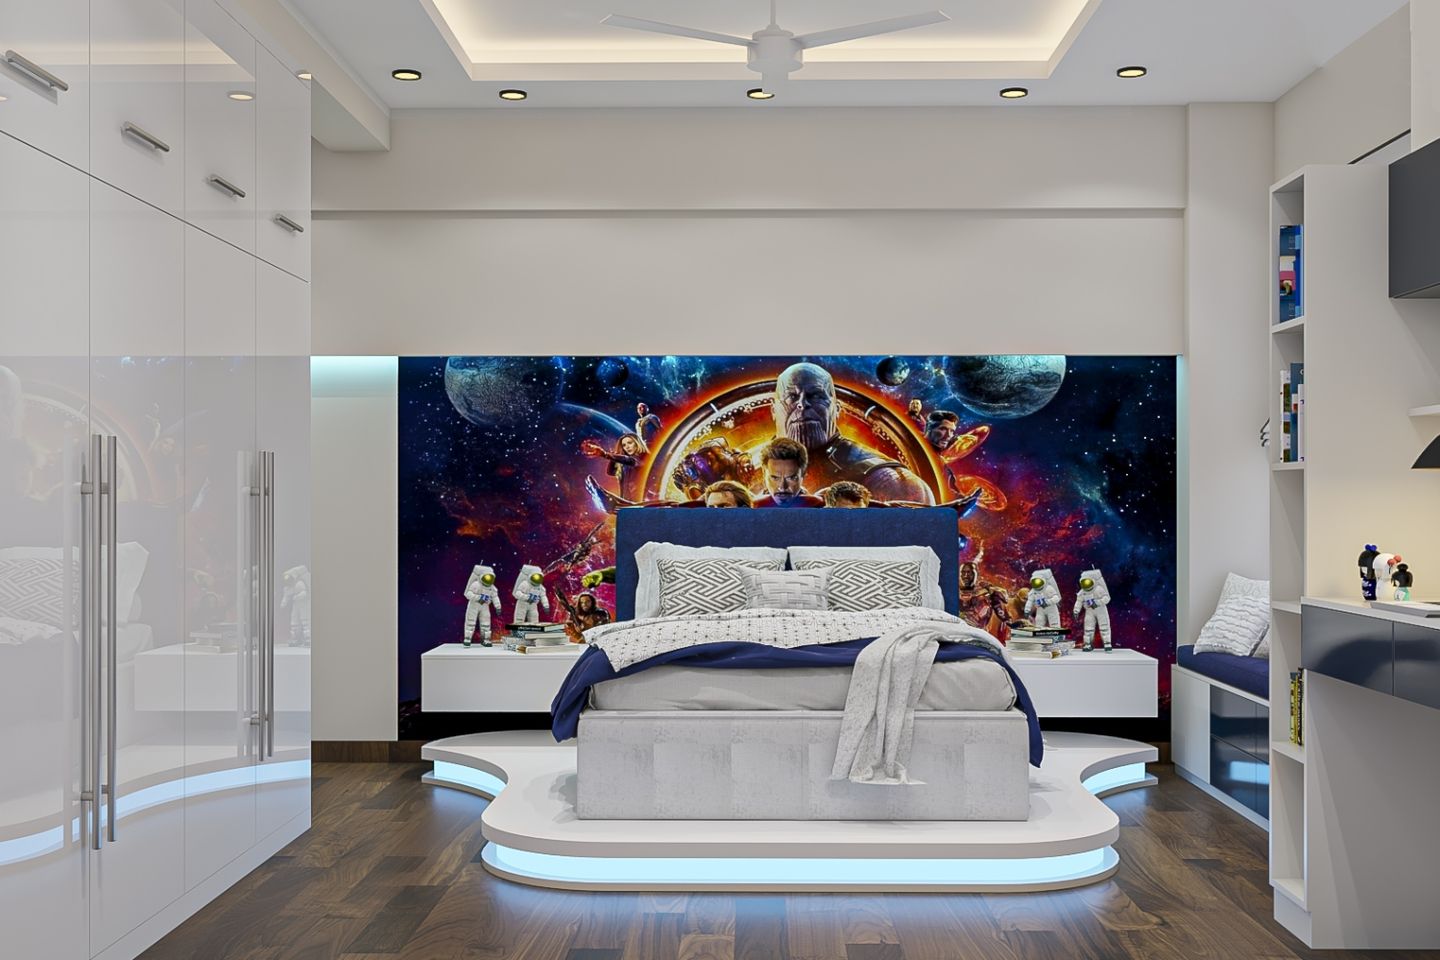 Modern Kids Bedroom Design With Avengers-Themed Wallpaper, Swing Wardrobe And Platform Bed - Livspace